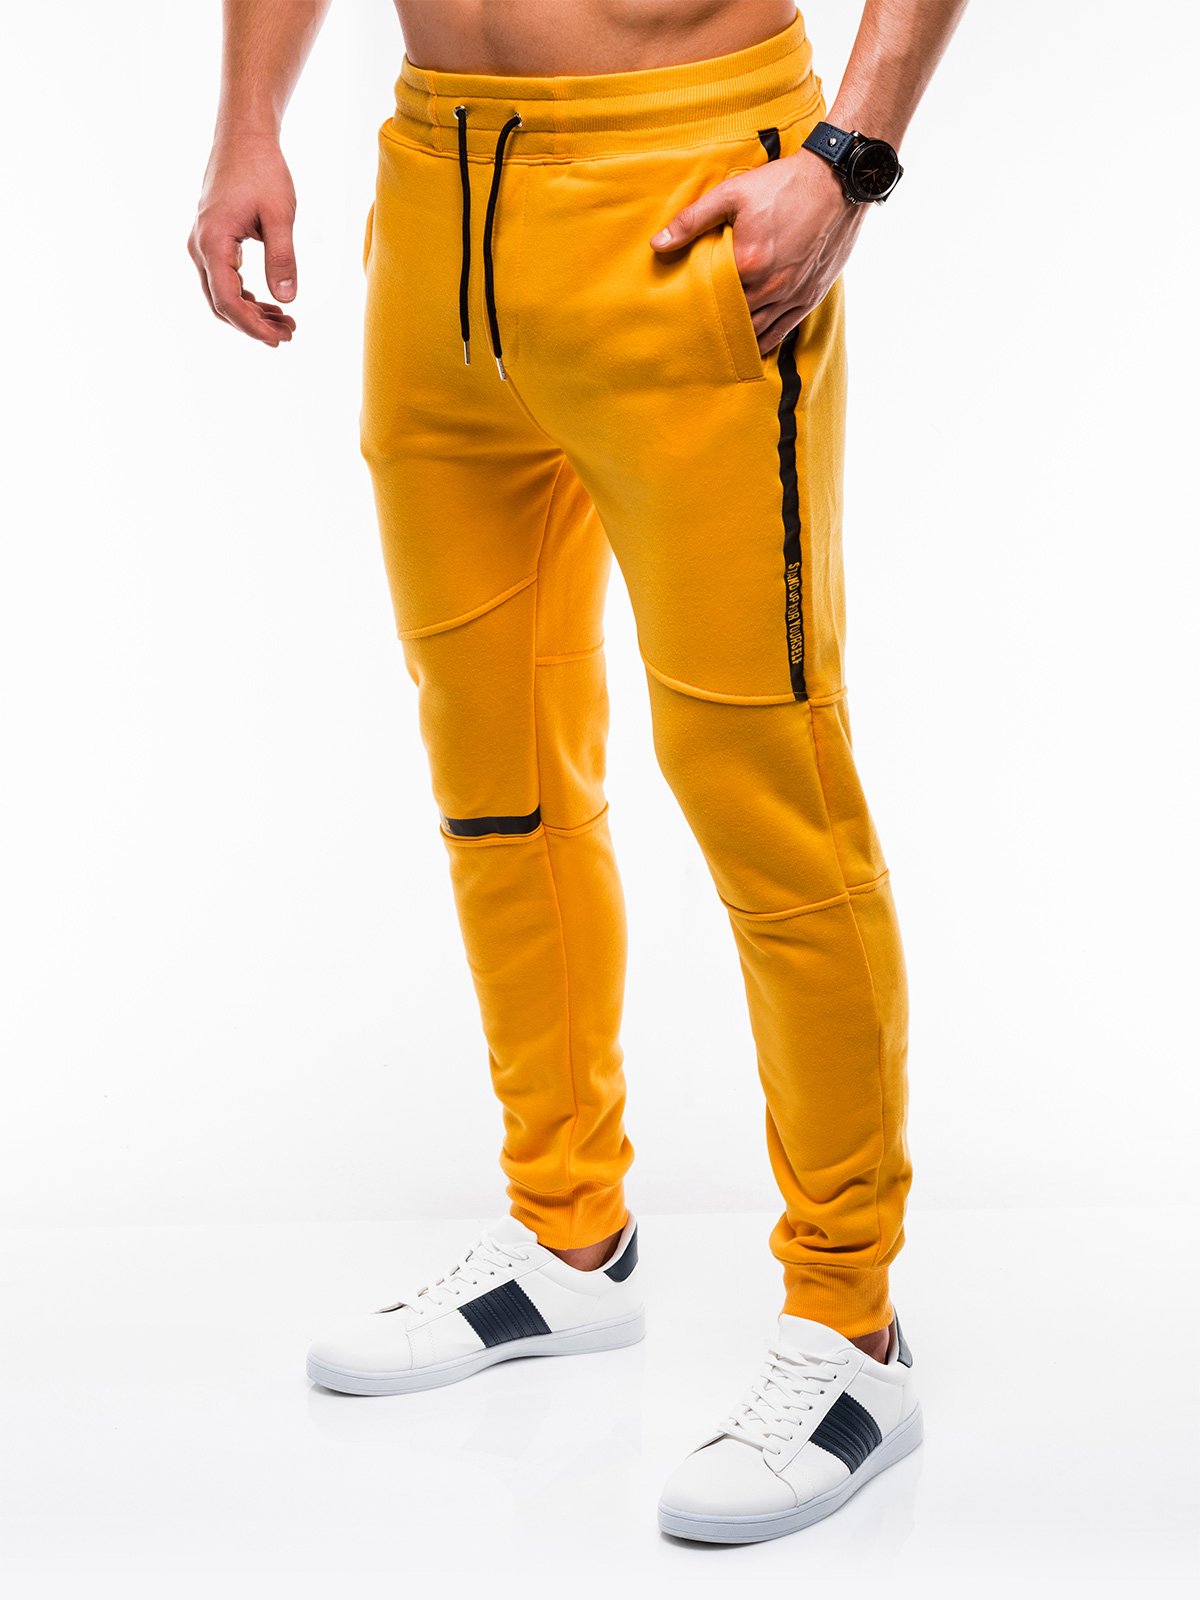 Men's sweatpants P743 - yellow | MODONE wholesale - Clothing For Men